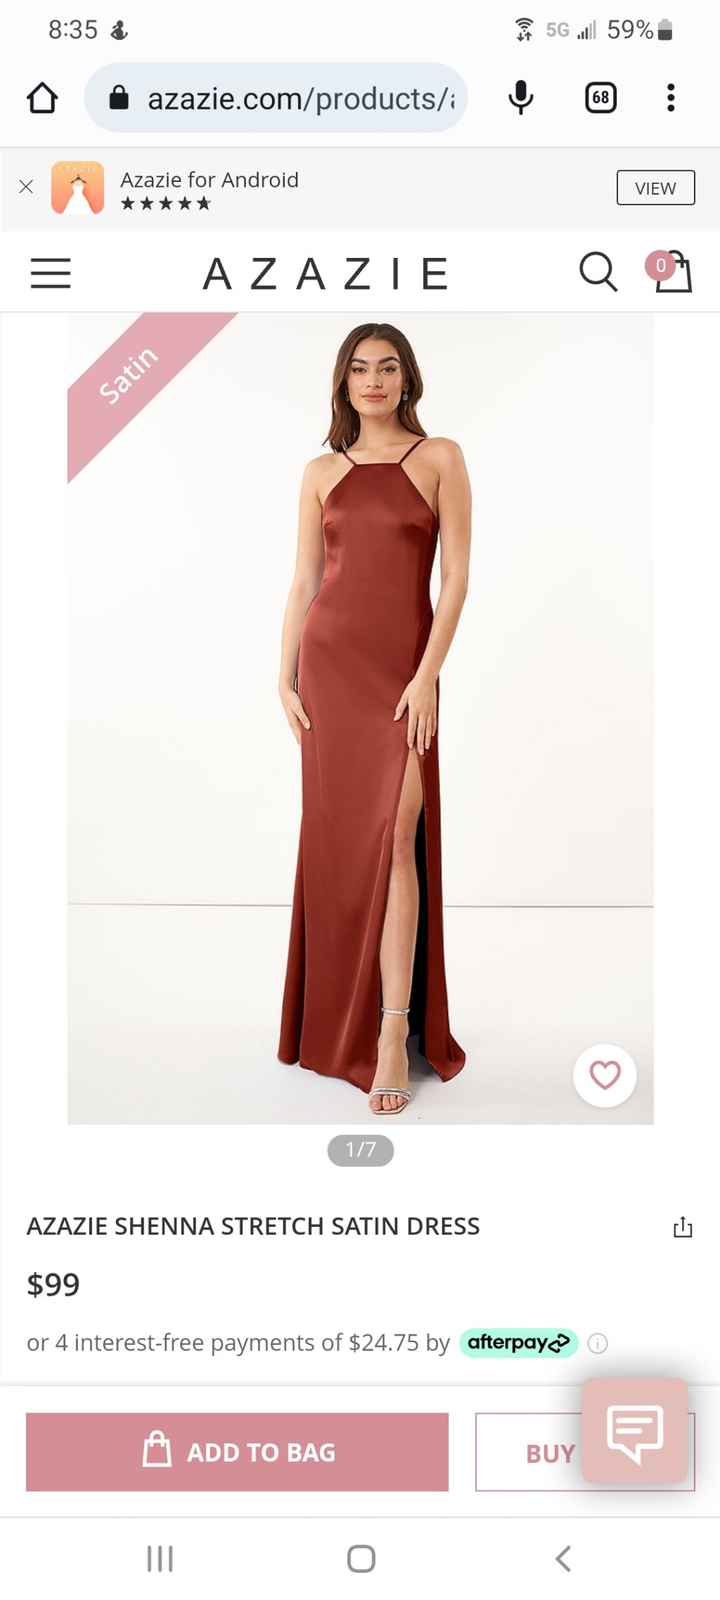 moh Dress Cost - 1